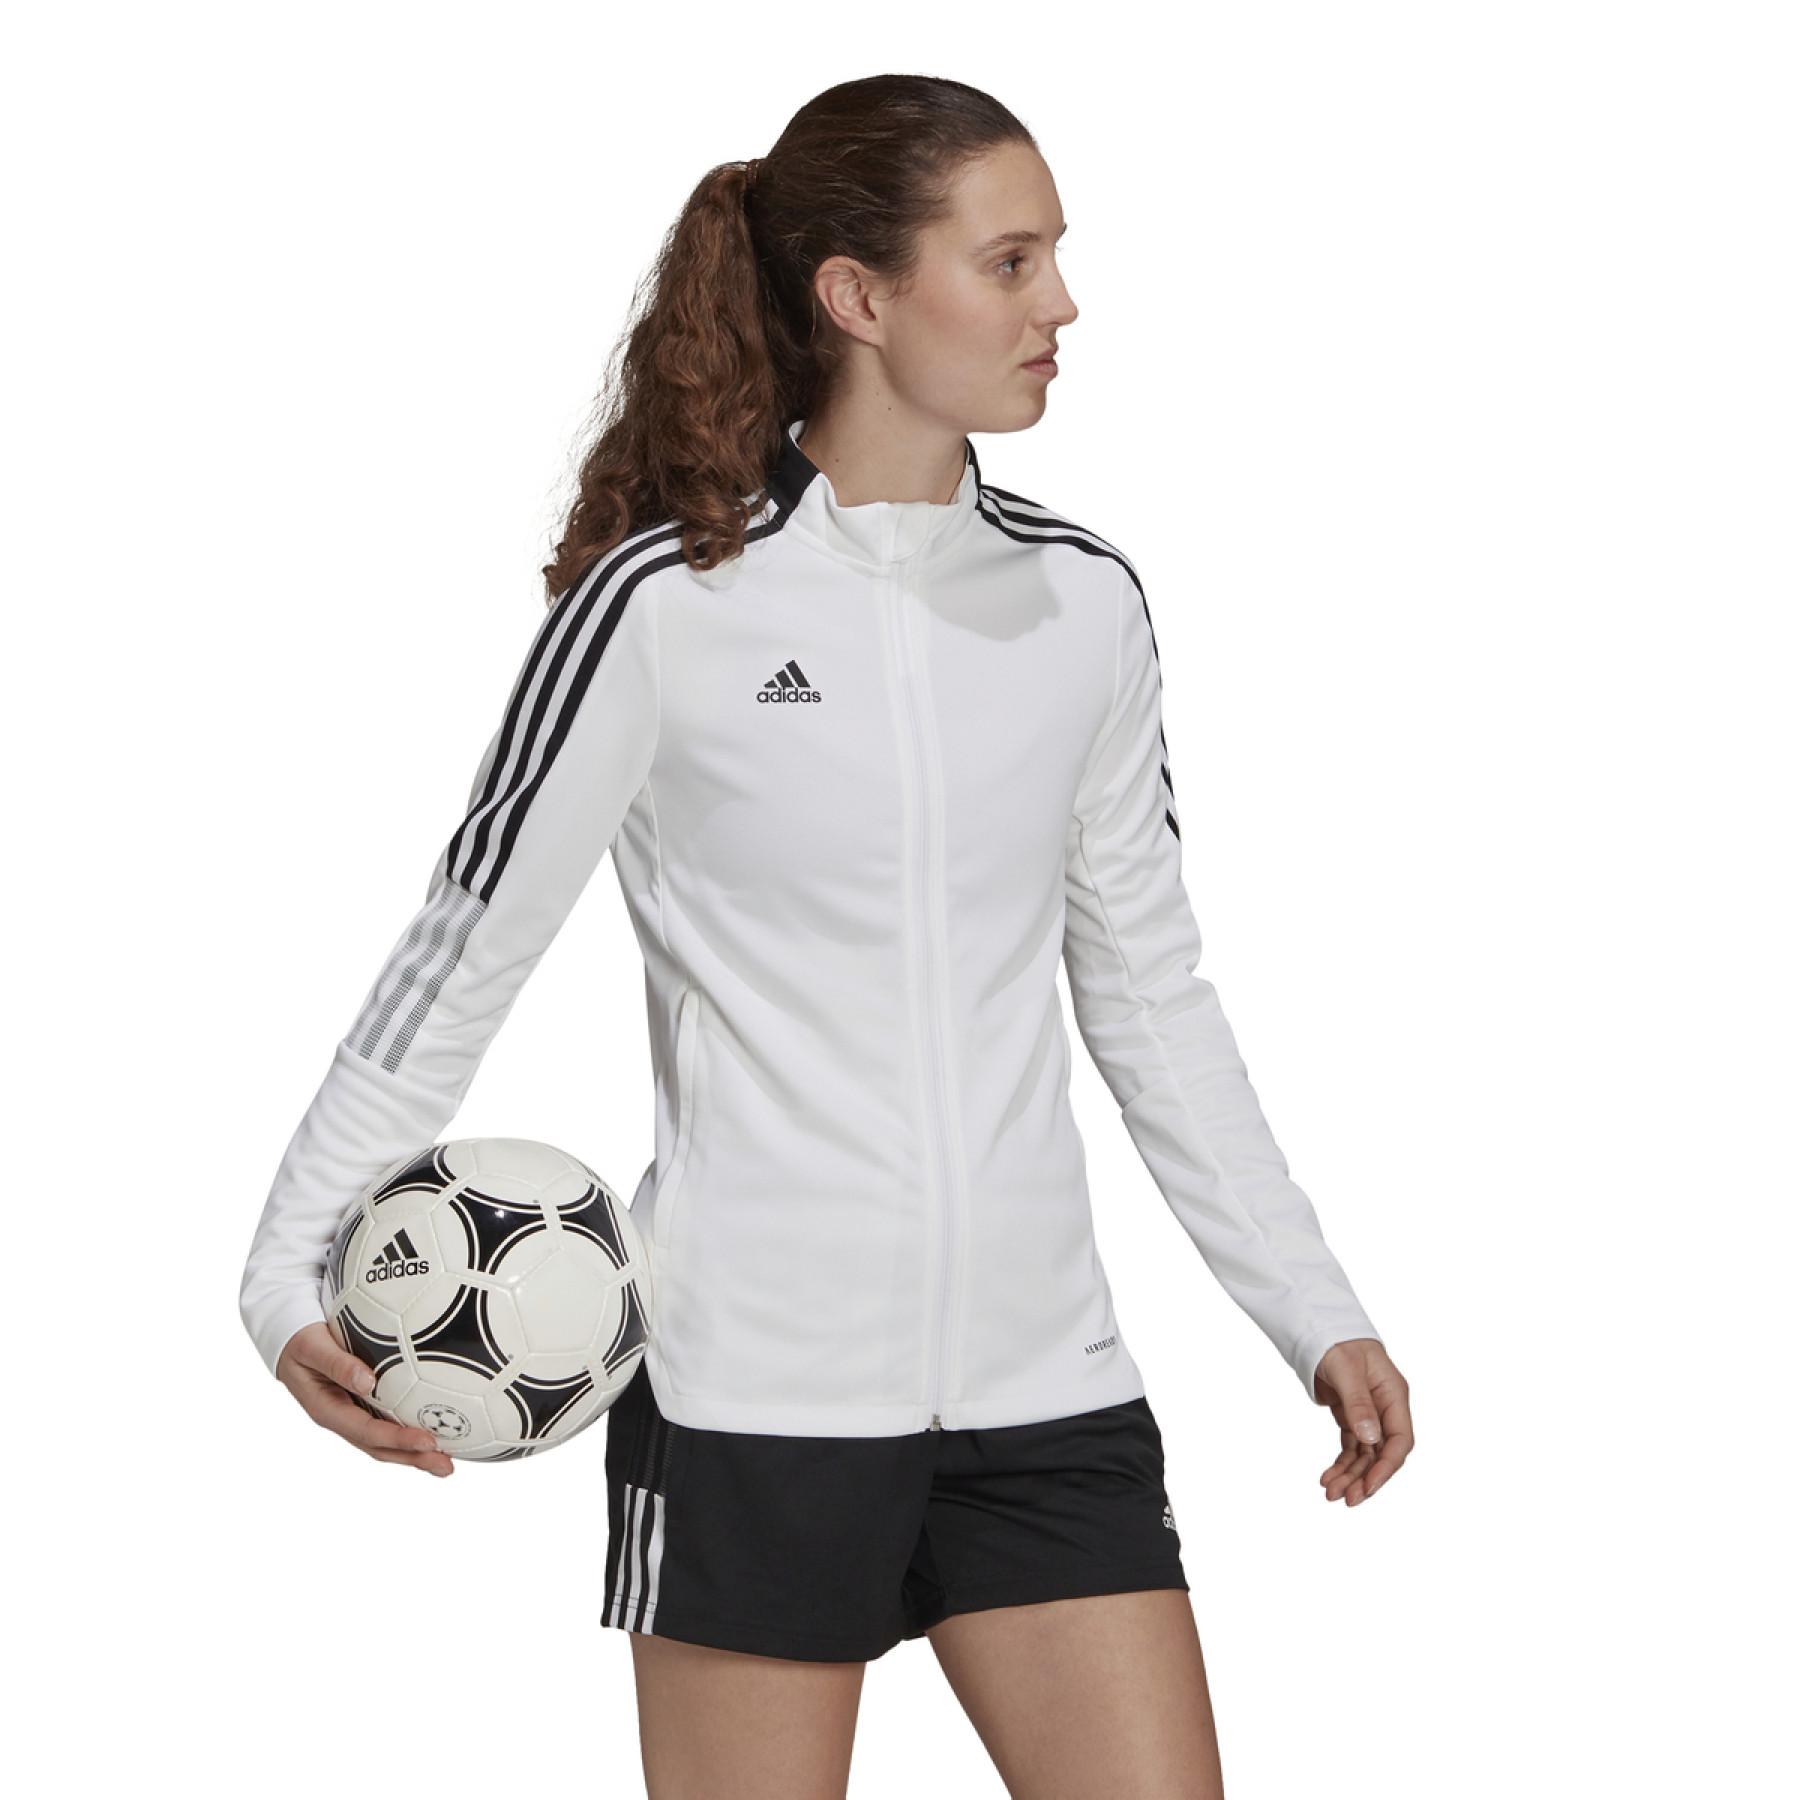 Women's jacket adidas Tiro 21 Track - adidas - Training Tops - Teamwear